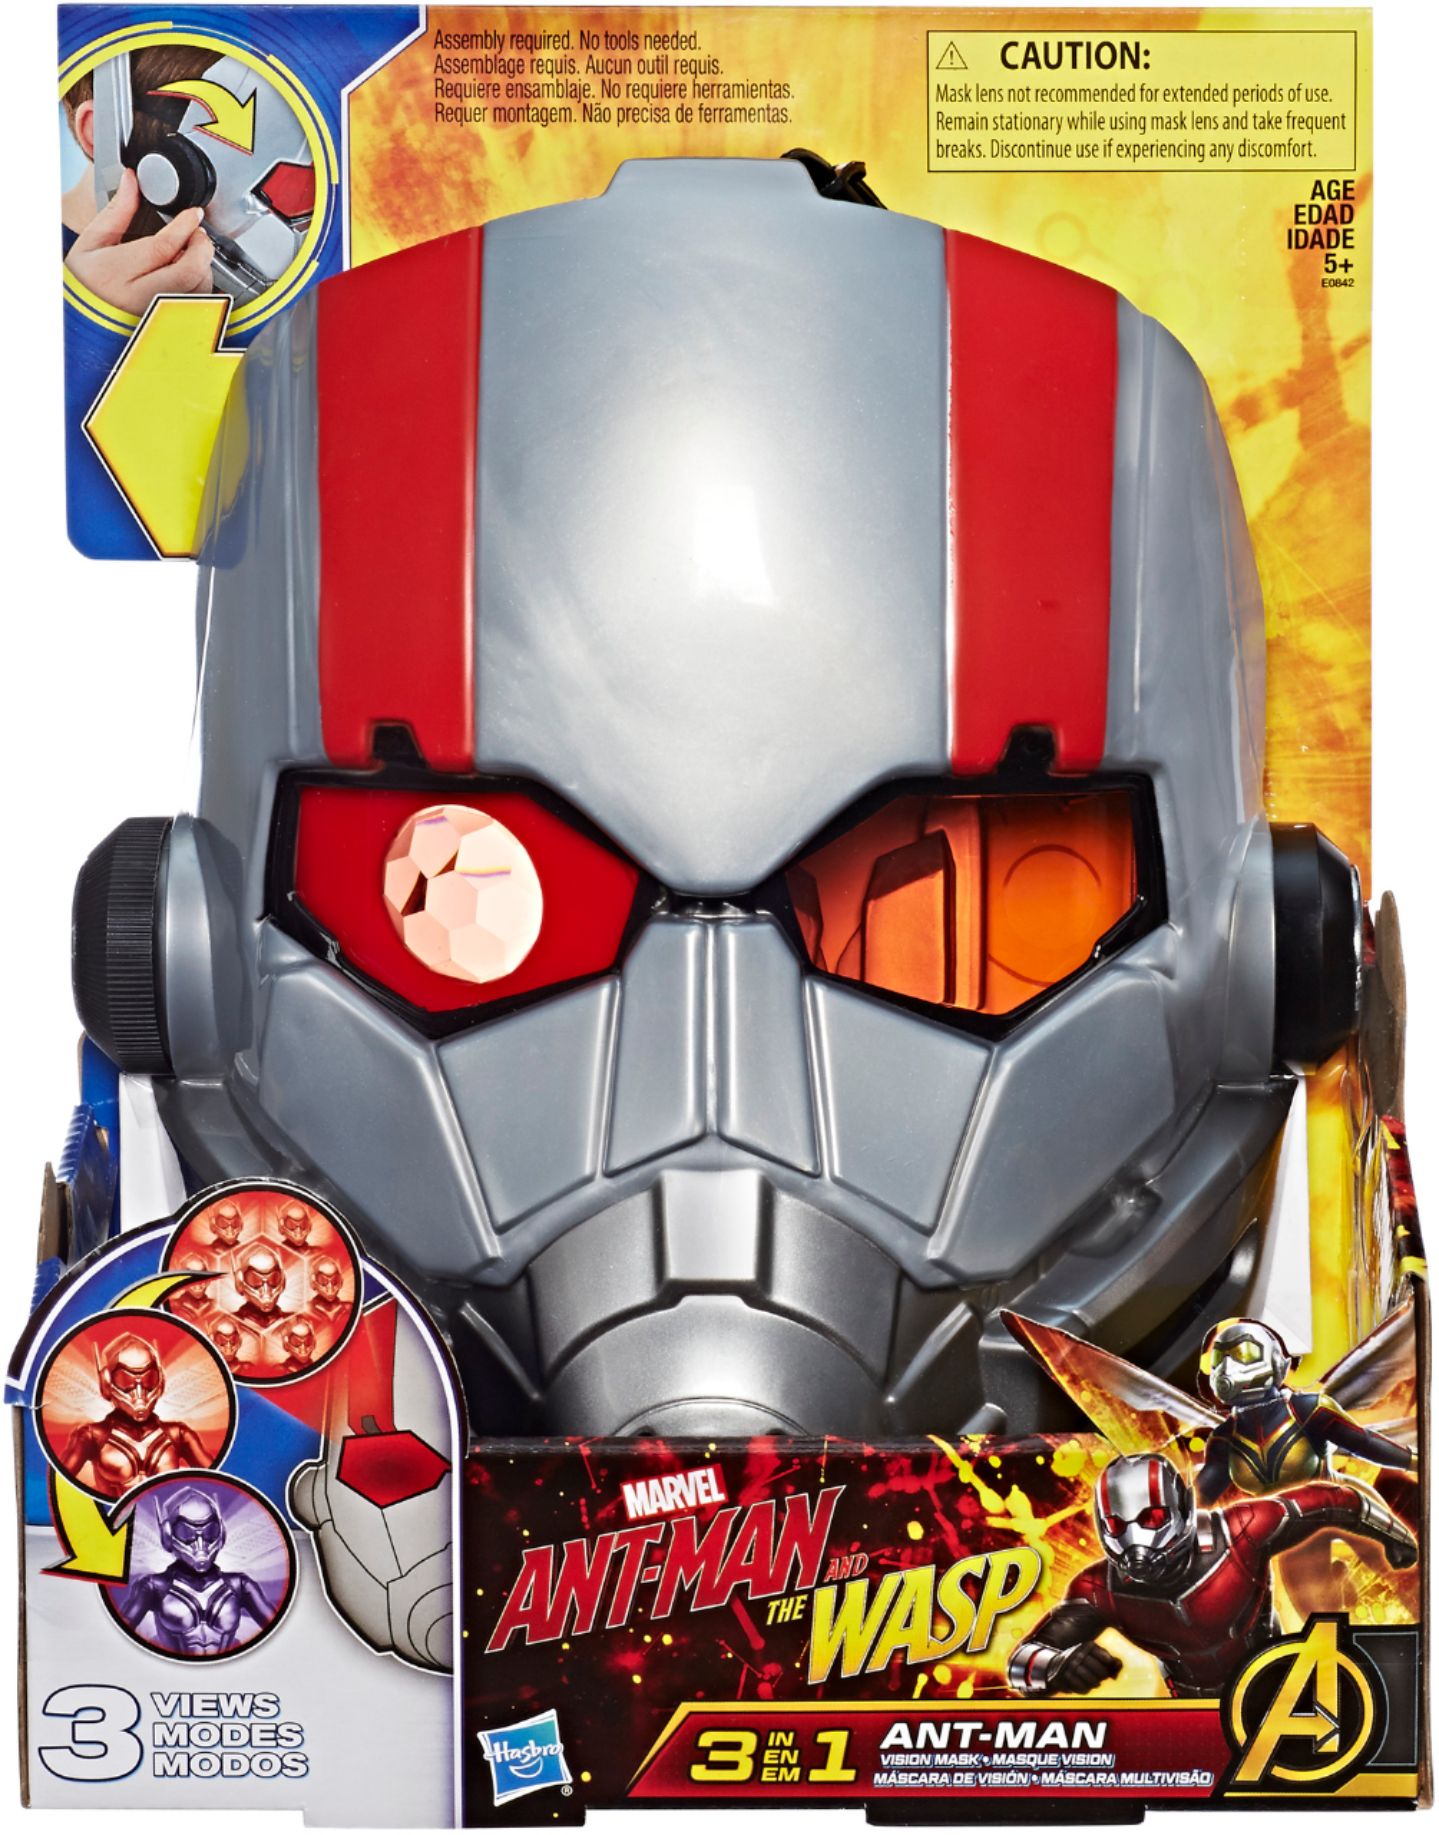 The Avengers Avengers E0842EU4 Marvel Wasp 3-in-1 Ant-Man Vision Mask